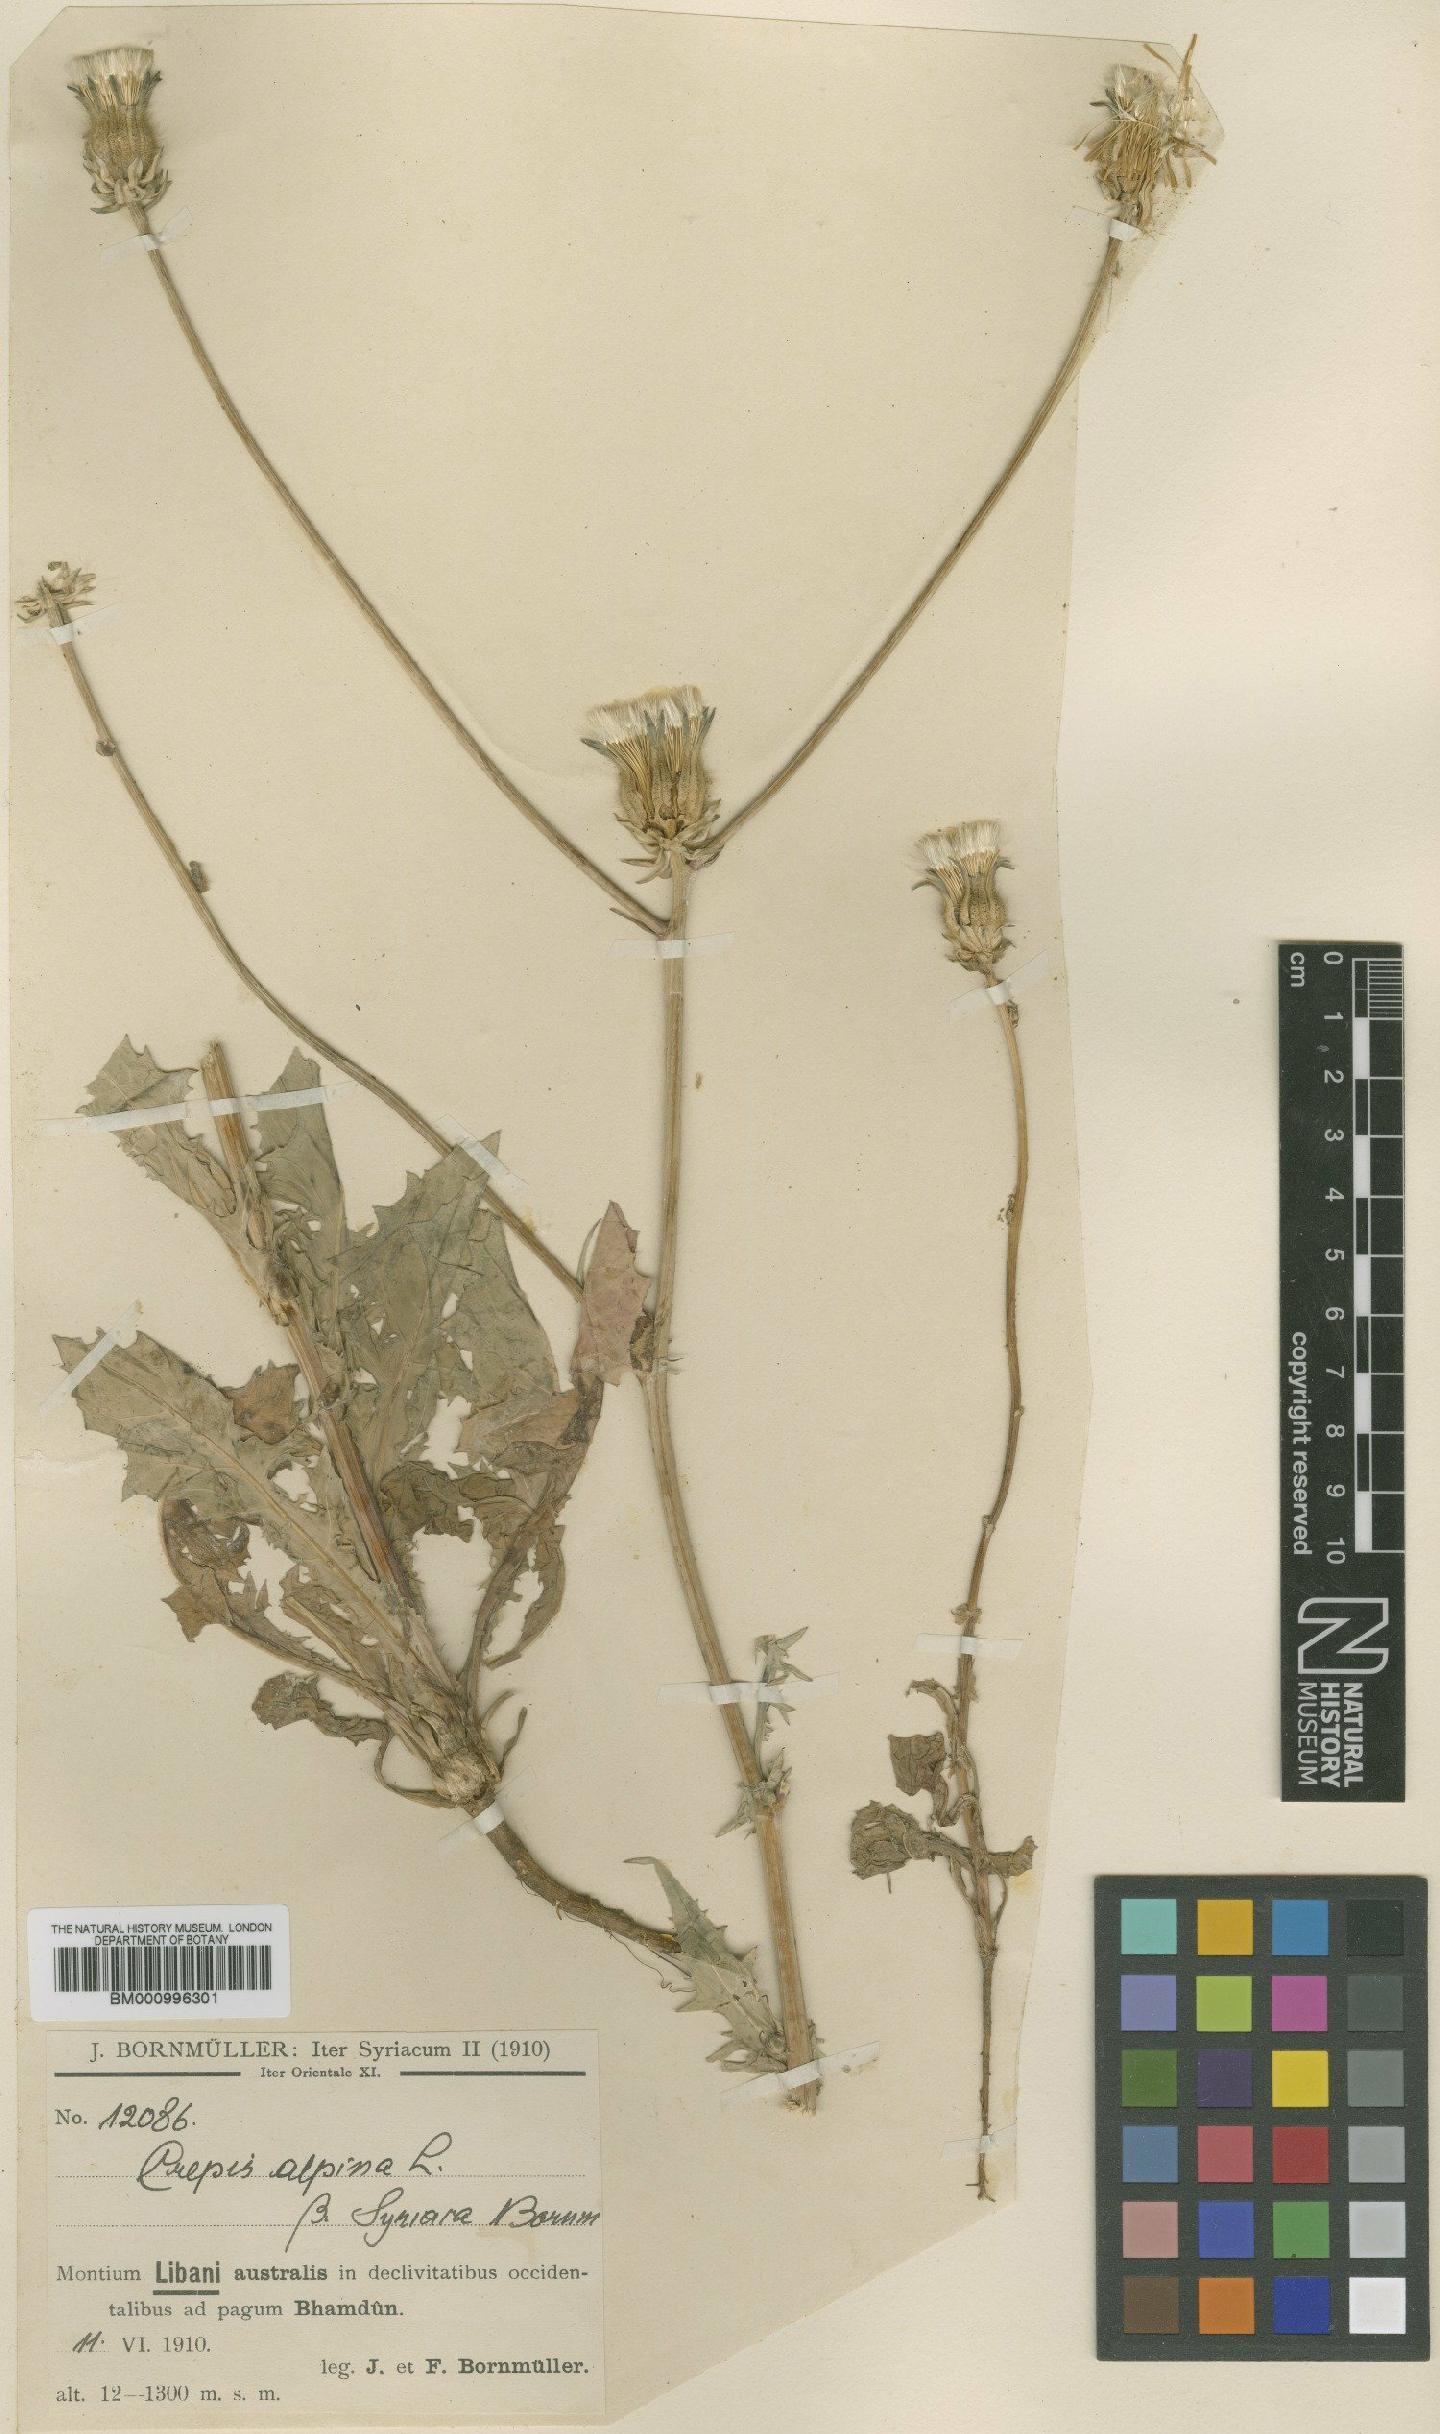 To NHMUK collection (Crepis syriaca (Bornm.) Babc. & Navashin; Type; NHMUK:ecatalogue:481505)